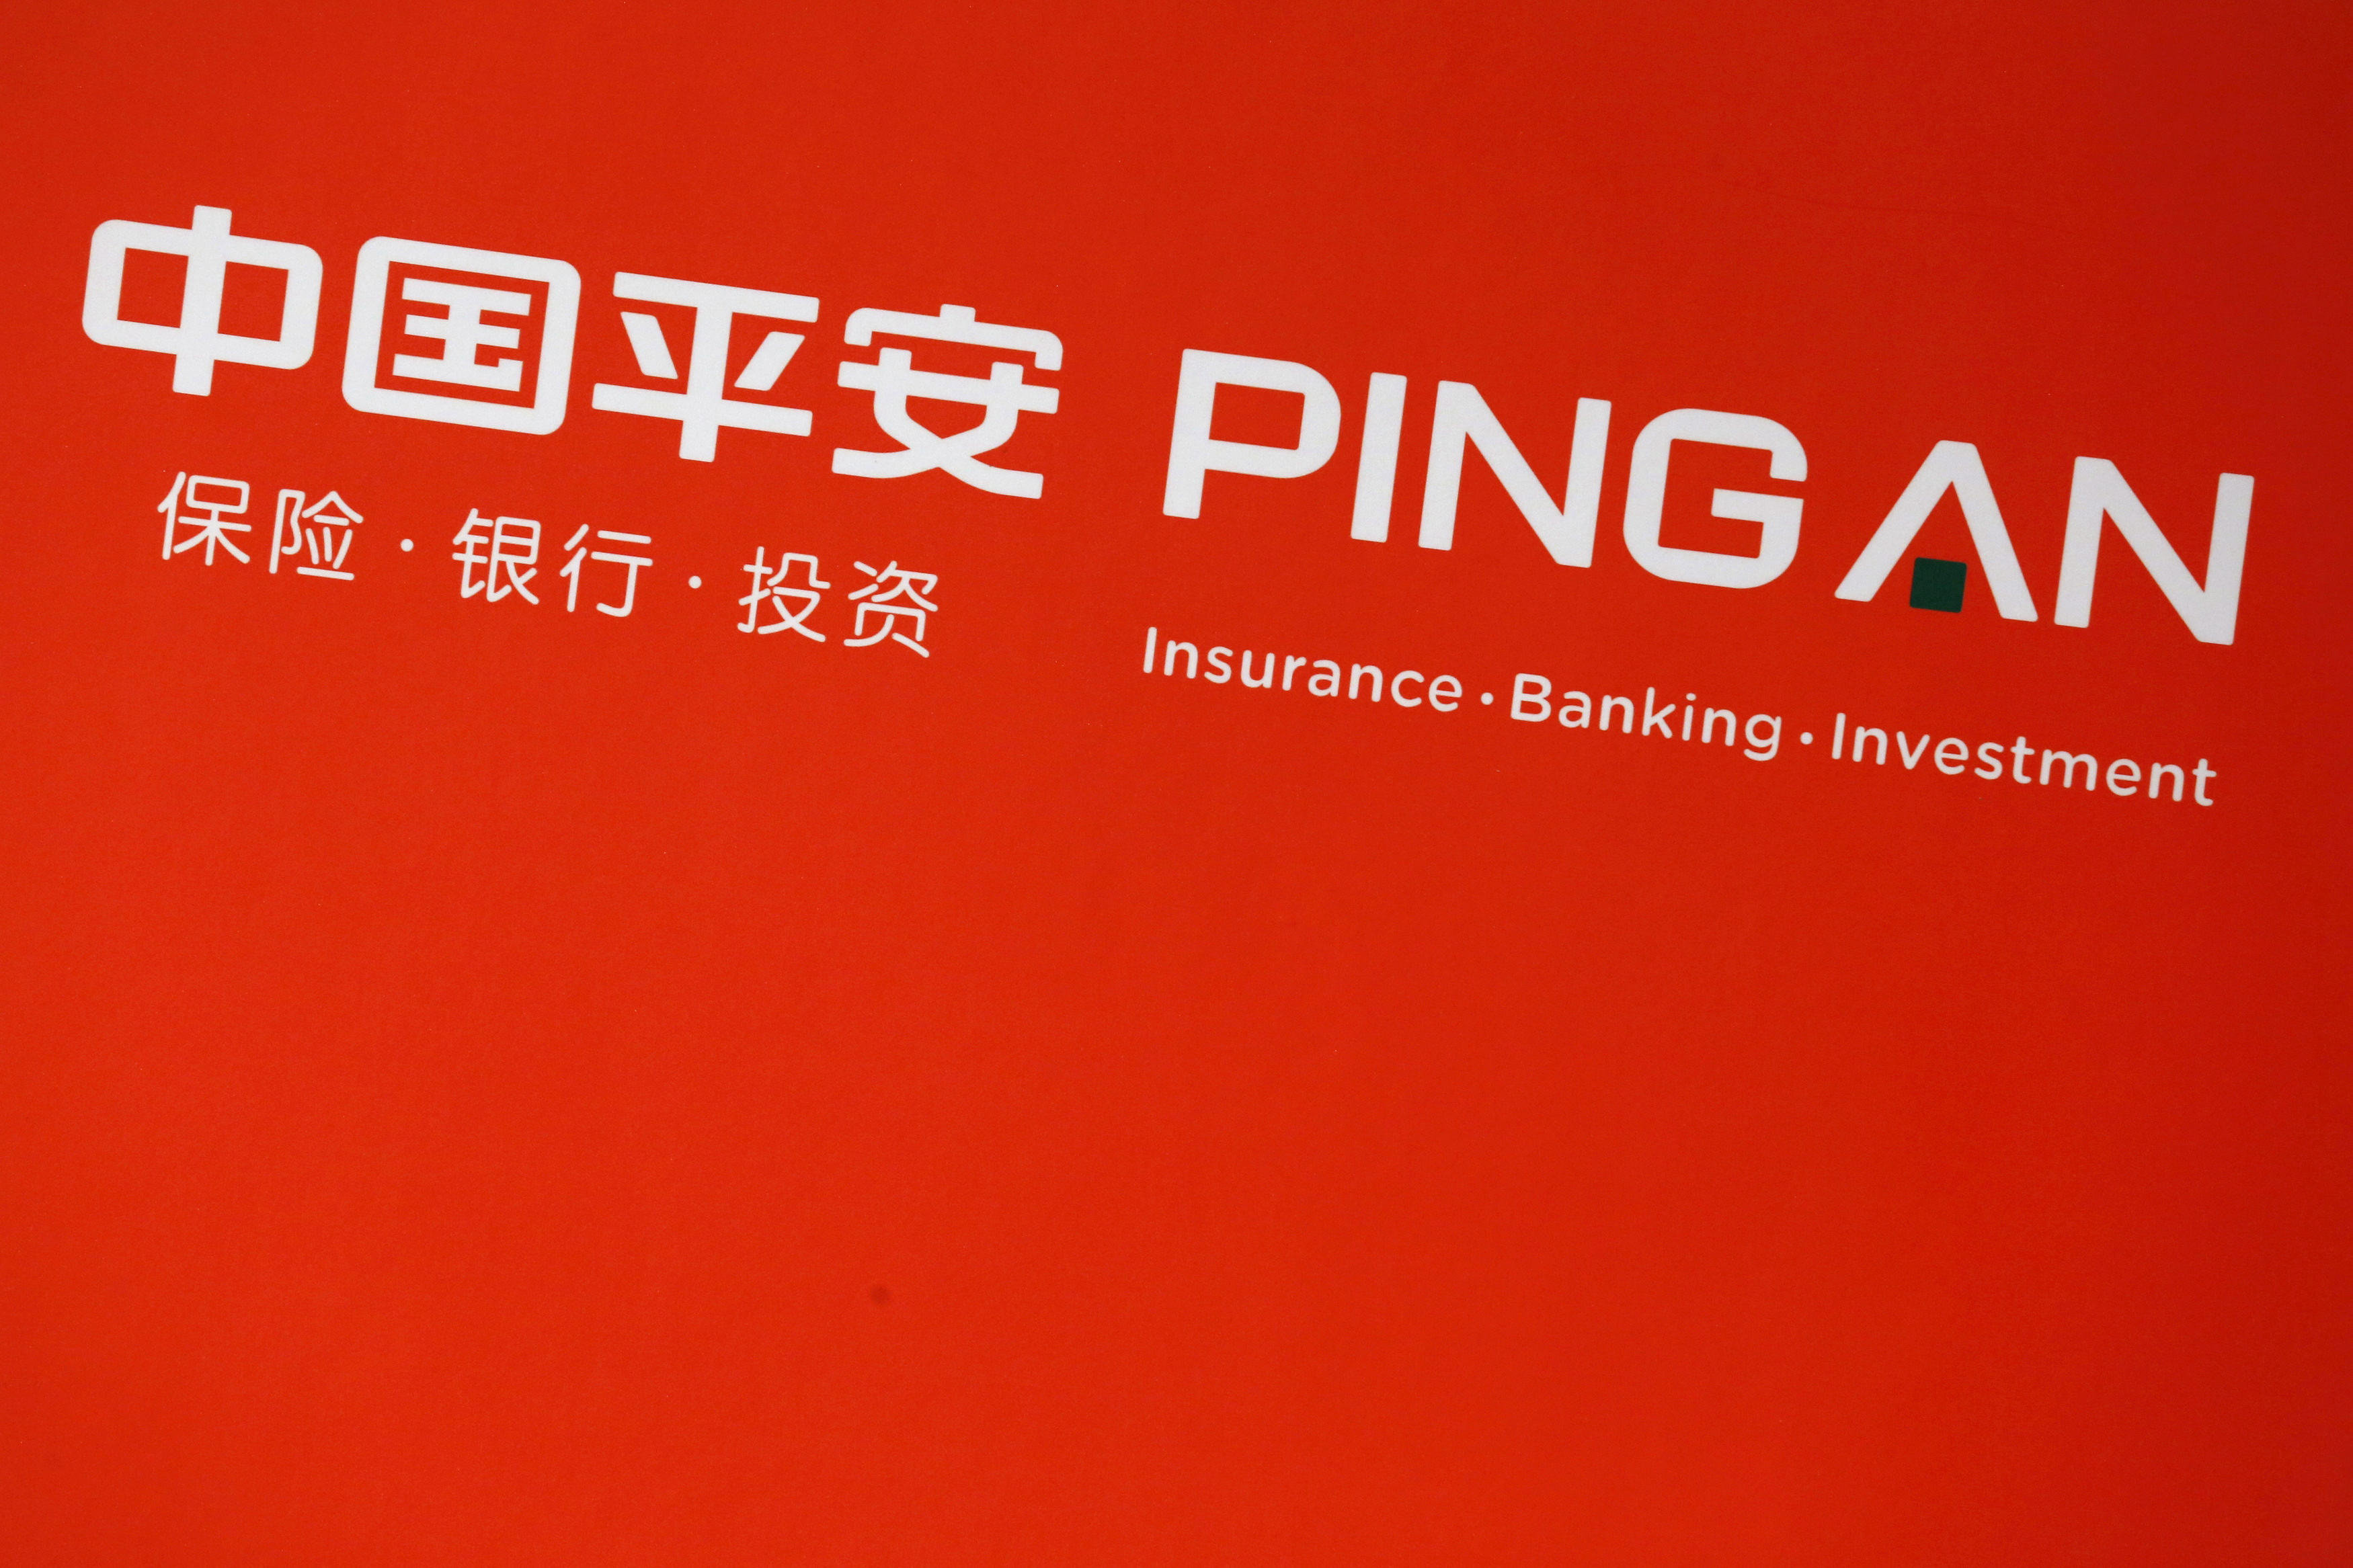 Ping an bank. Pingan китайская компания. “Ping an” компания. Компания Ping an insurance. China Life insurance и Ping an insurance.